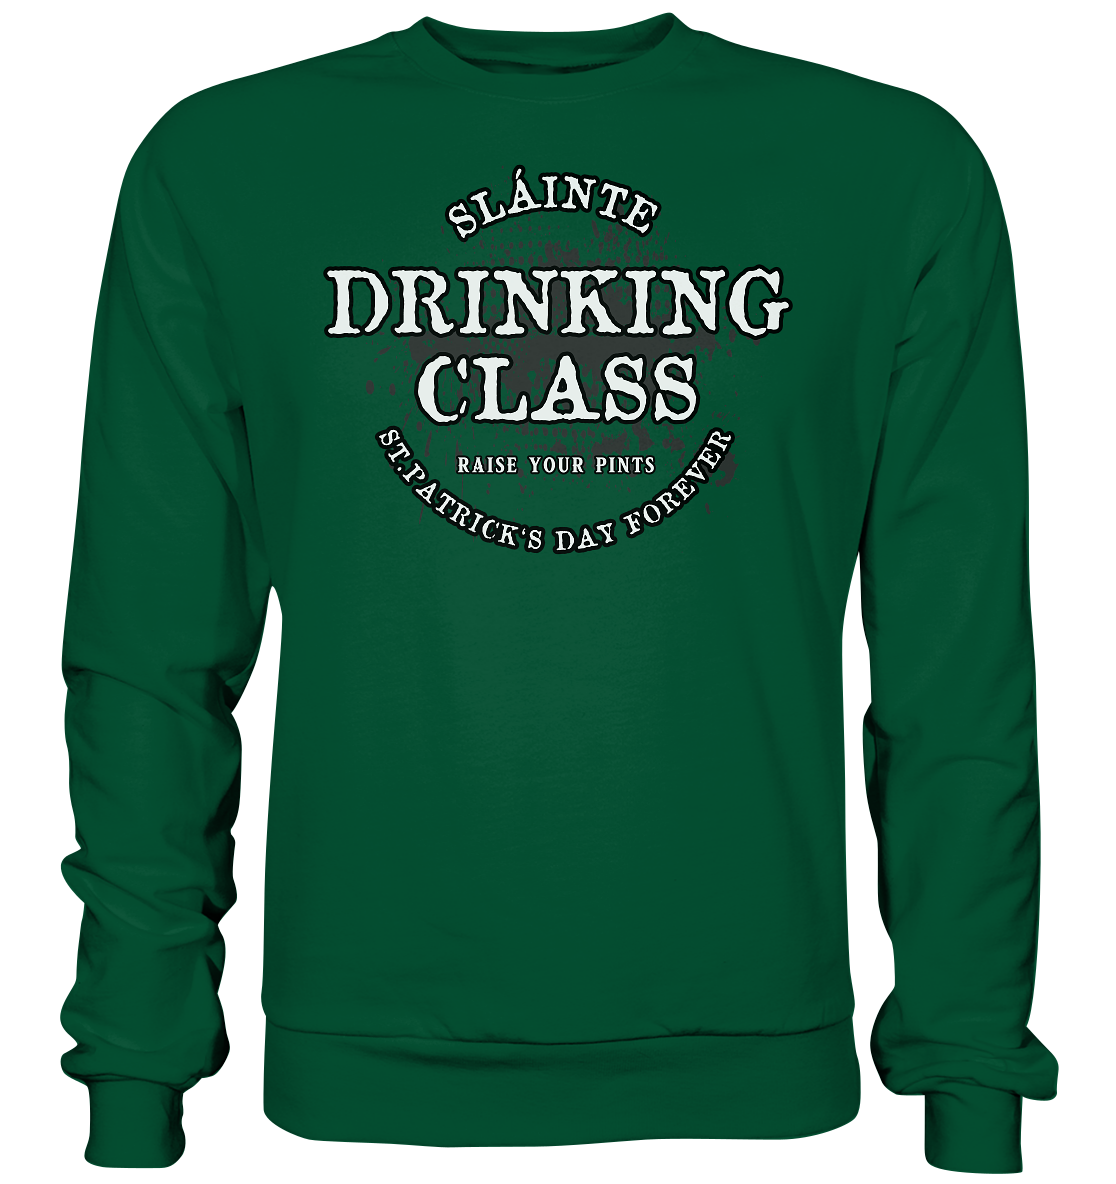 Drinking Class "St.Patrick's Day Forever" - Basic Sweatshirt